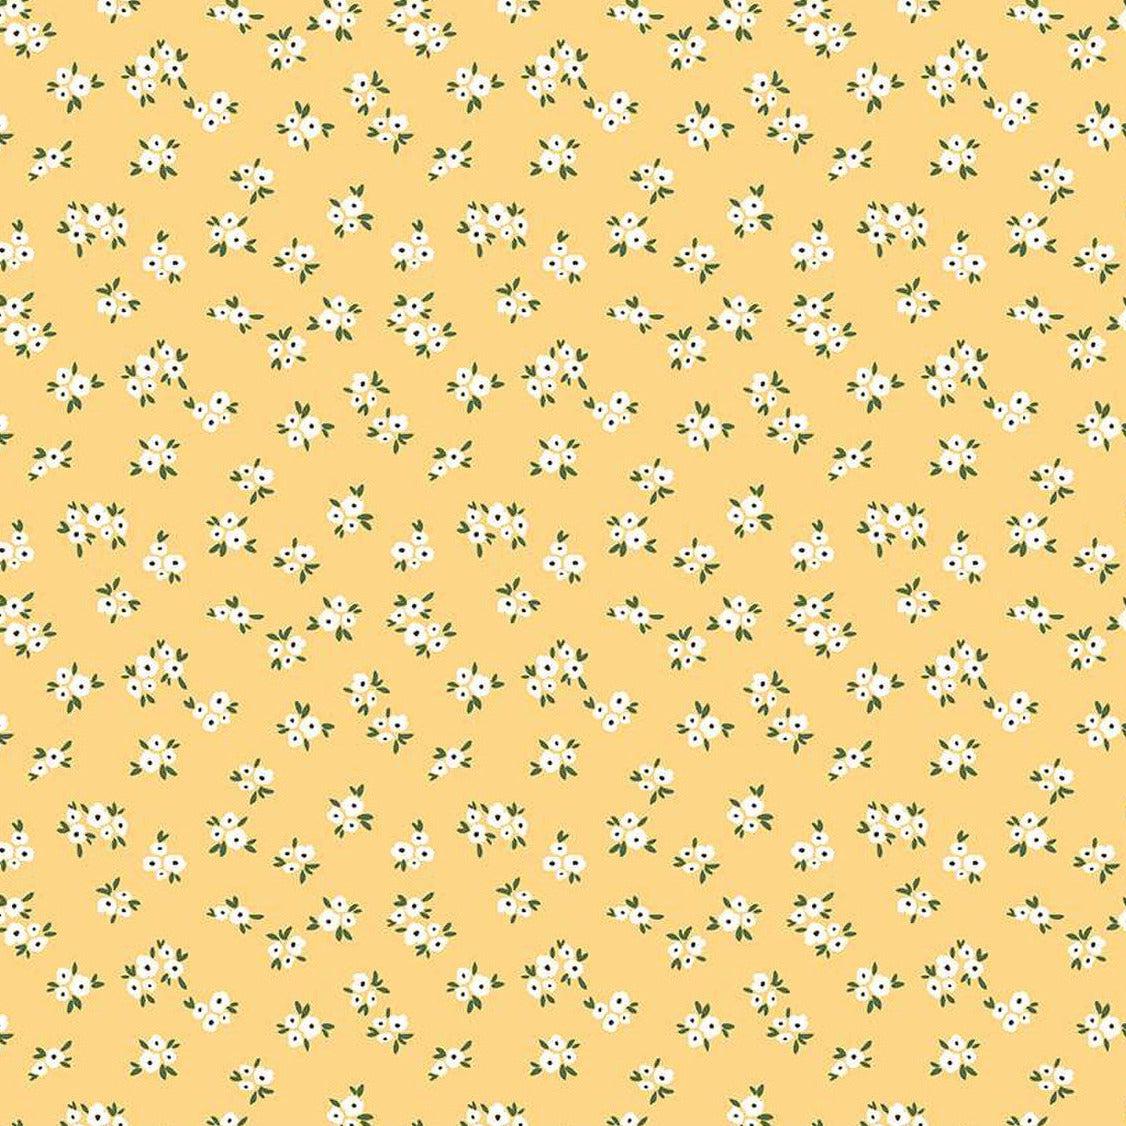 Homemade Sunshine Blossoms Fabric